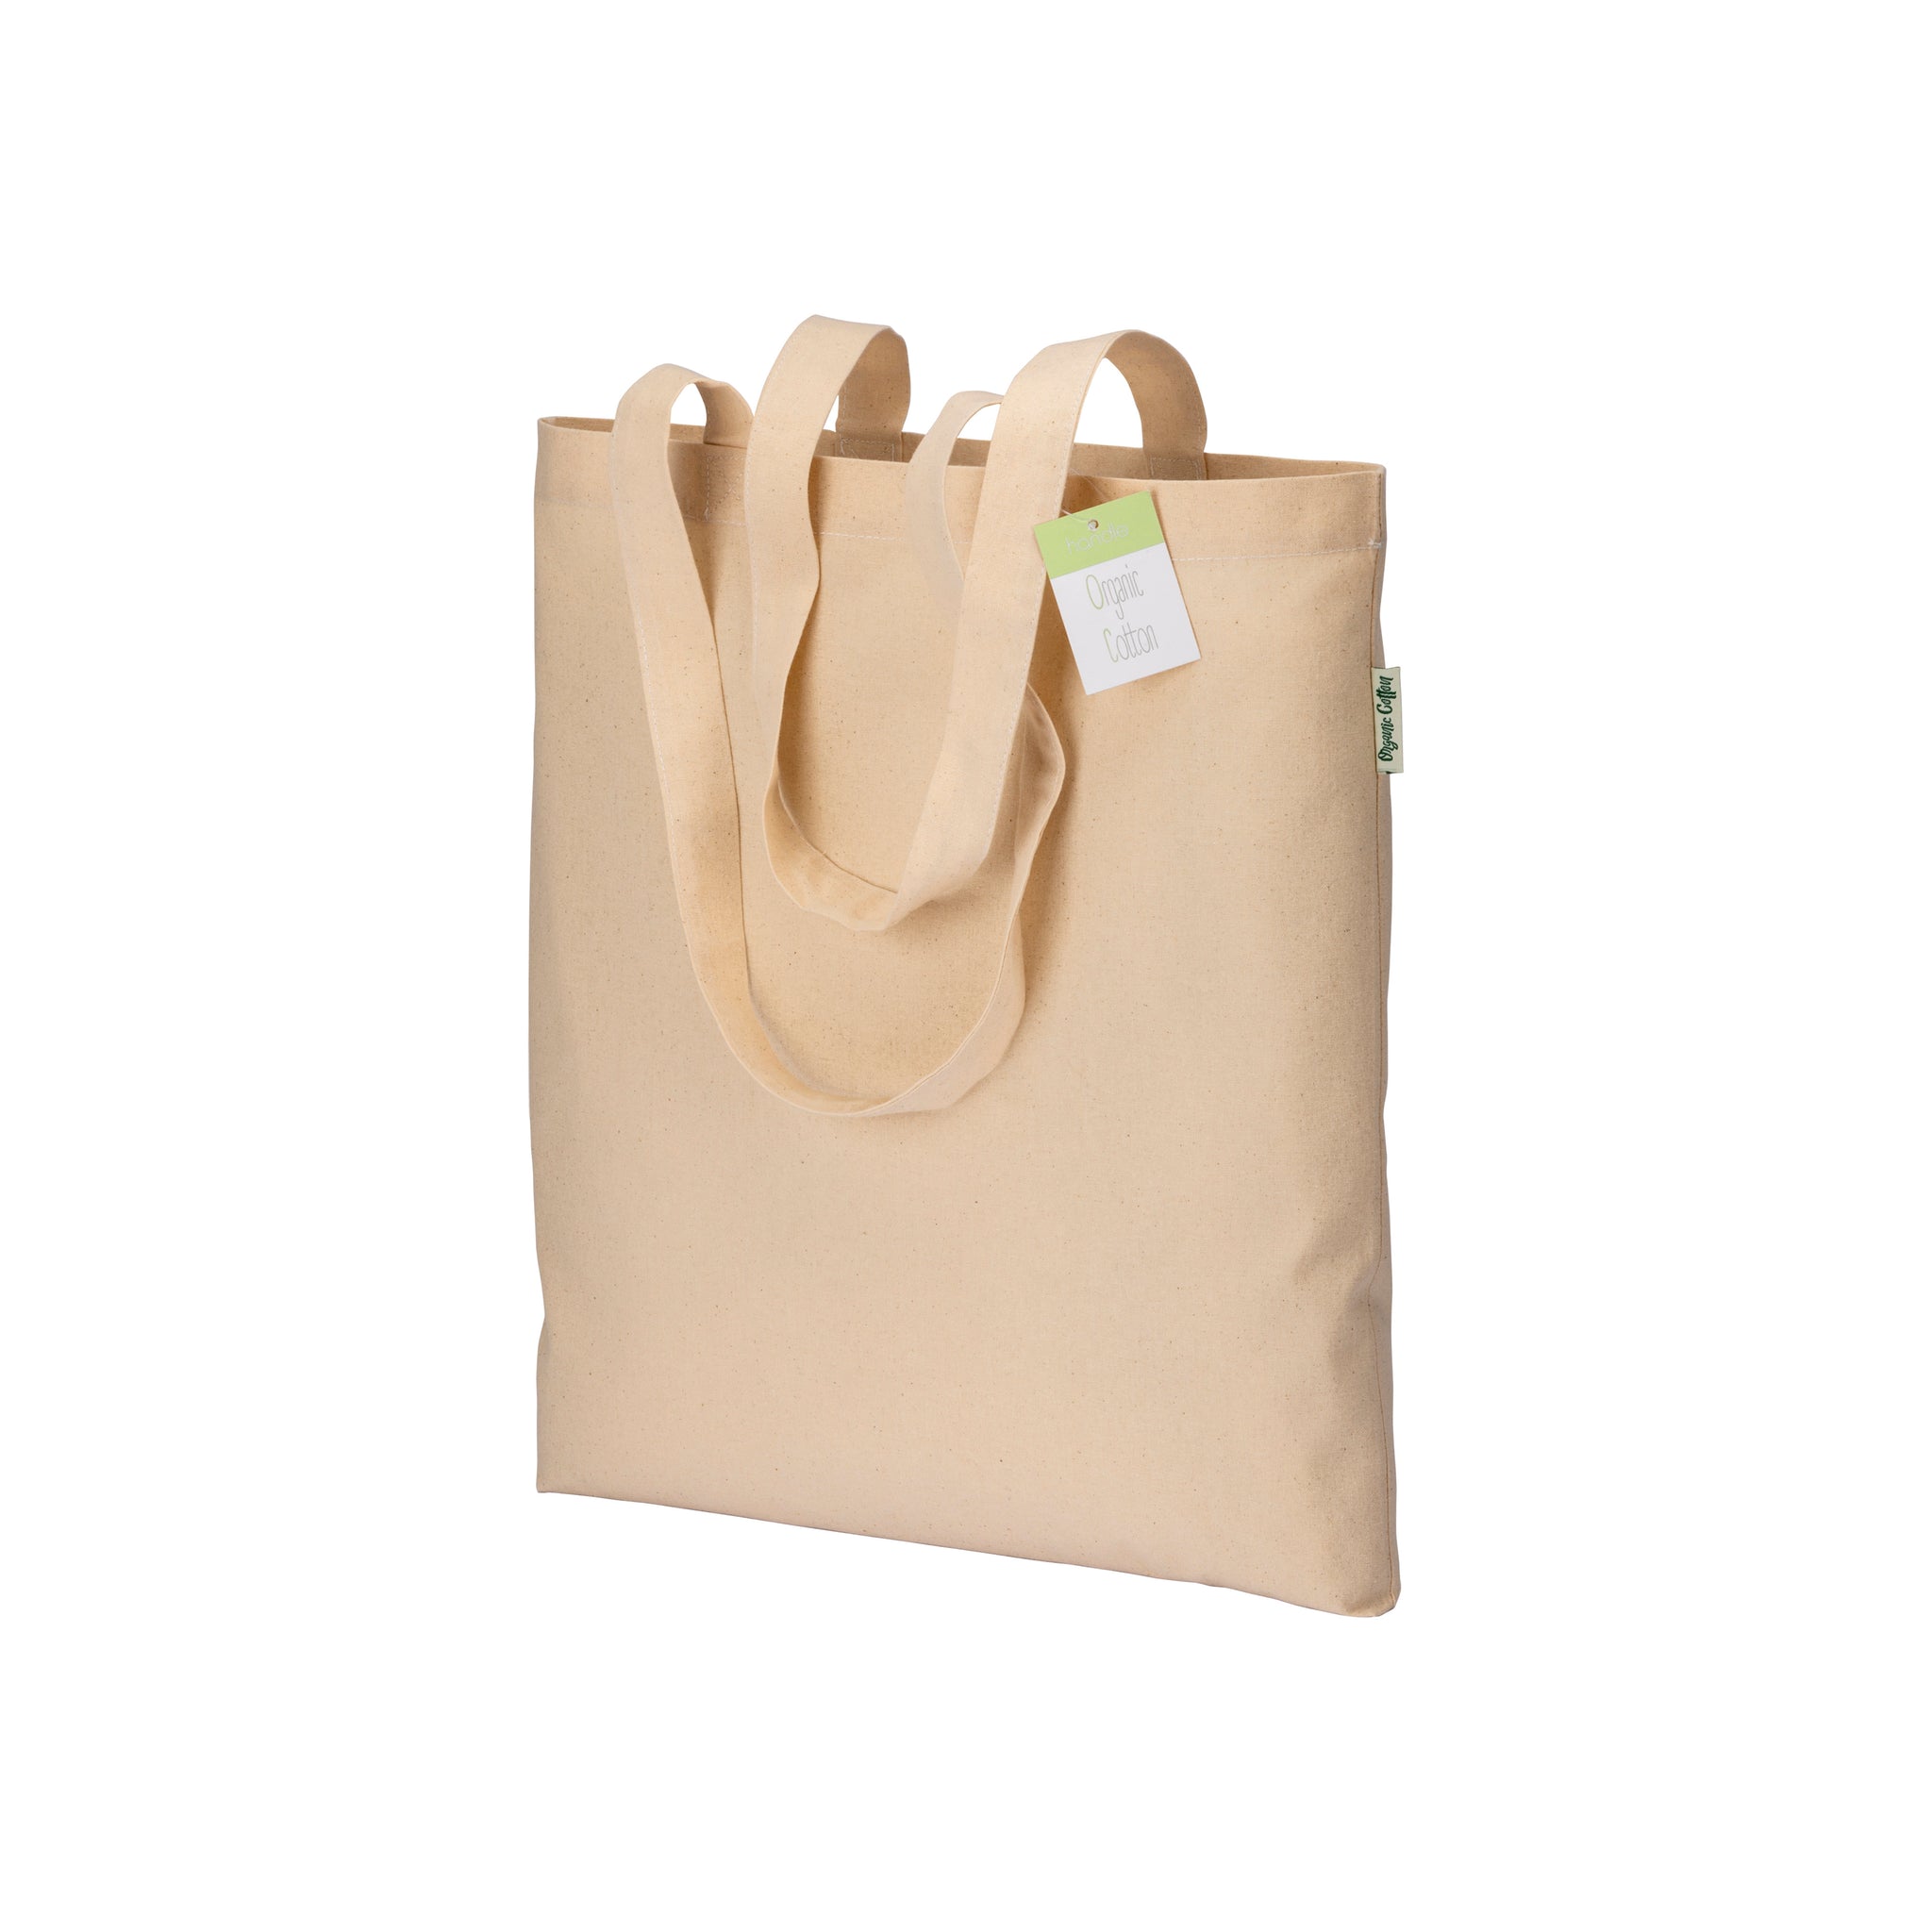 shopper bag pubblicitaria in cotone naturale 01375972 VAR01